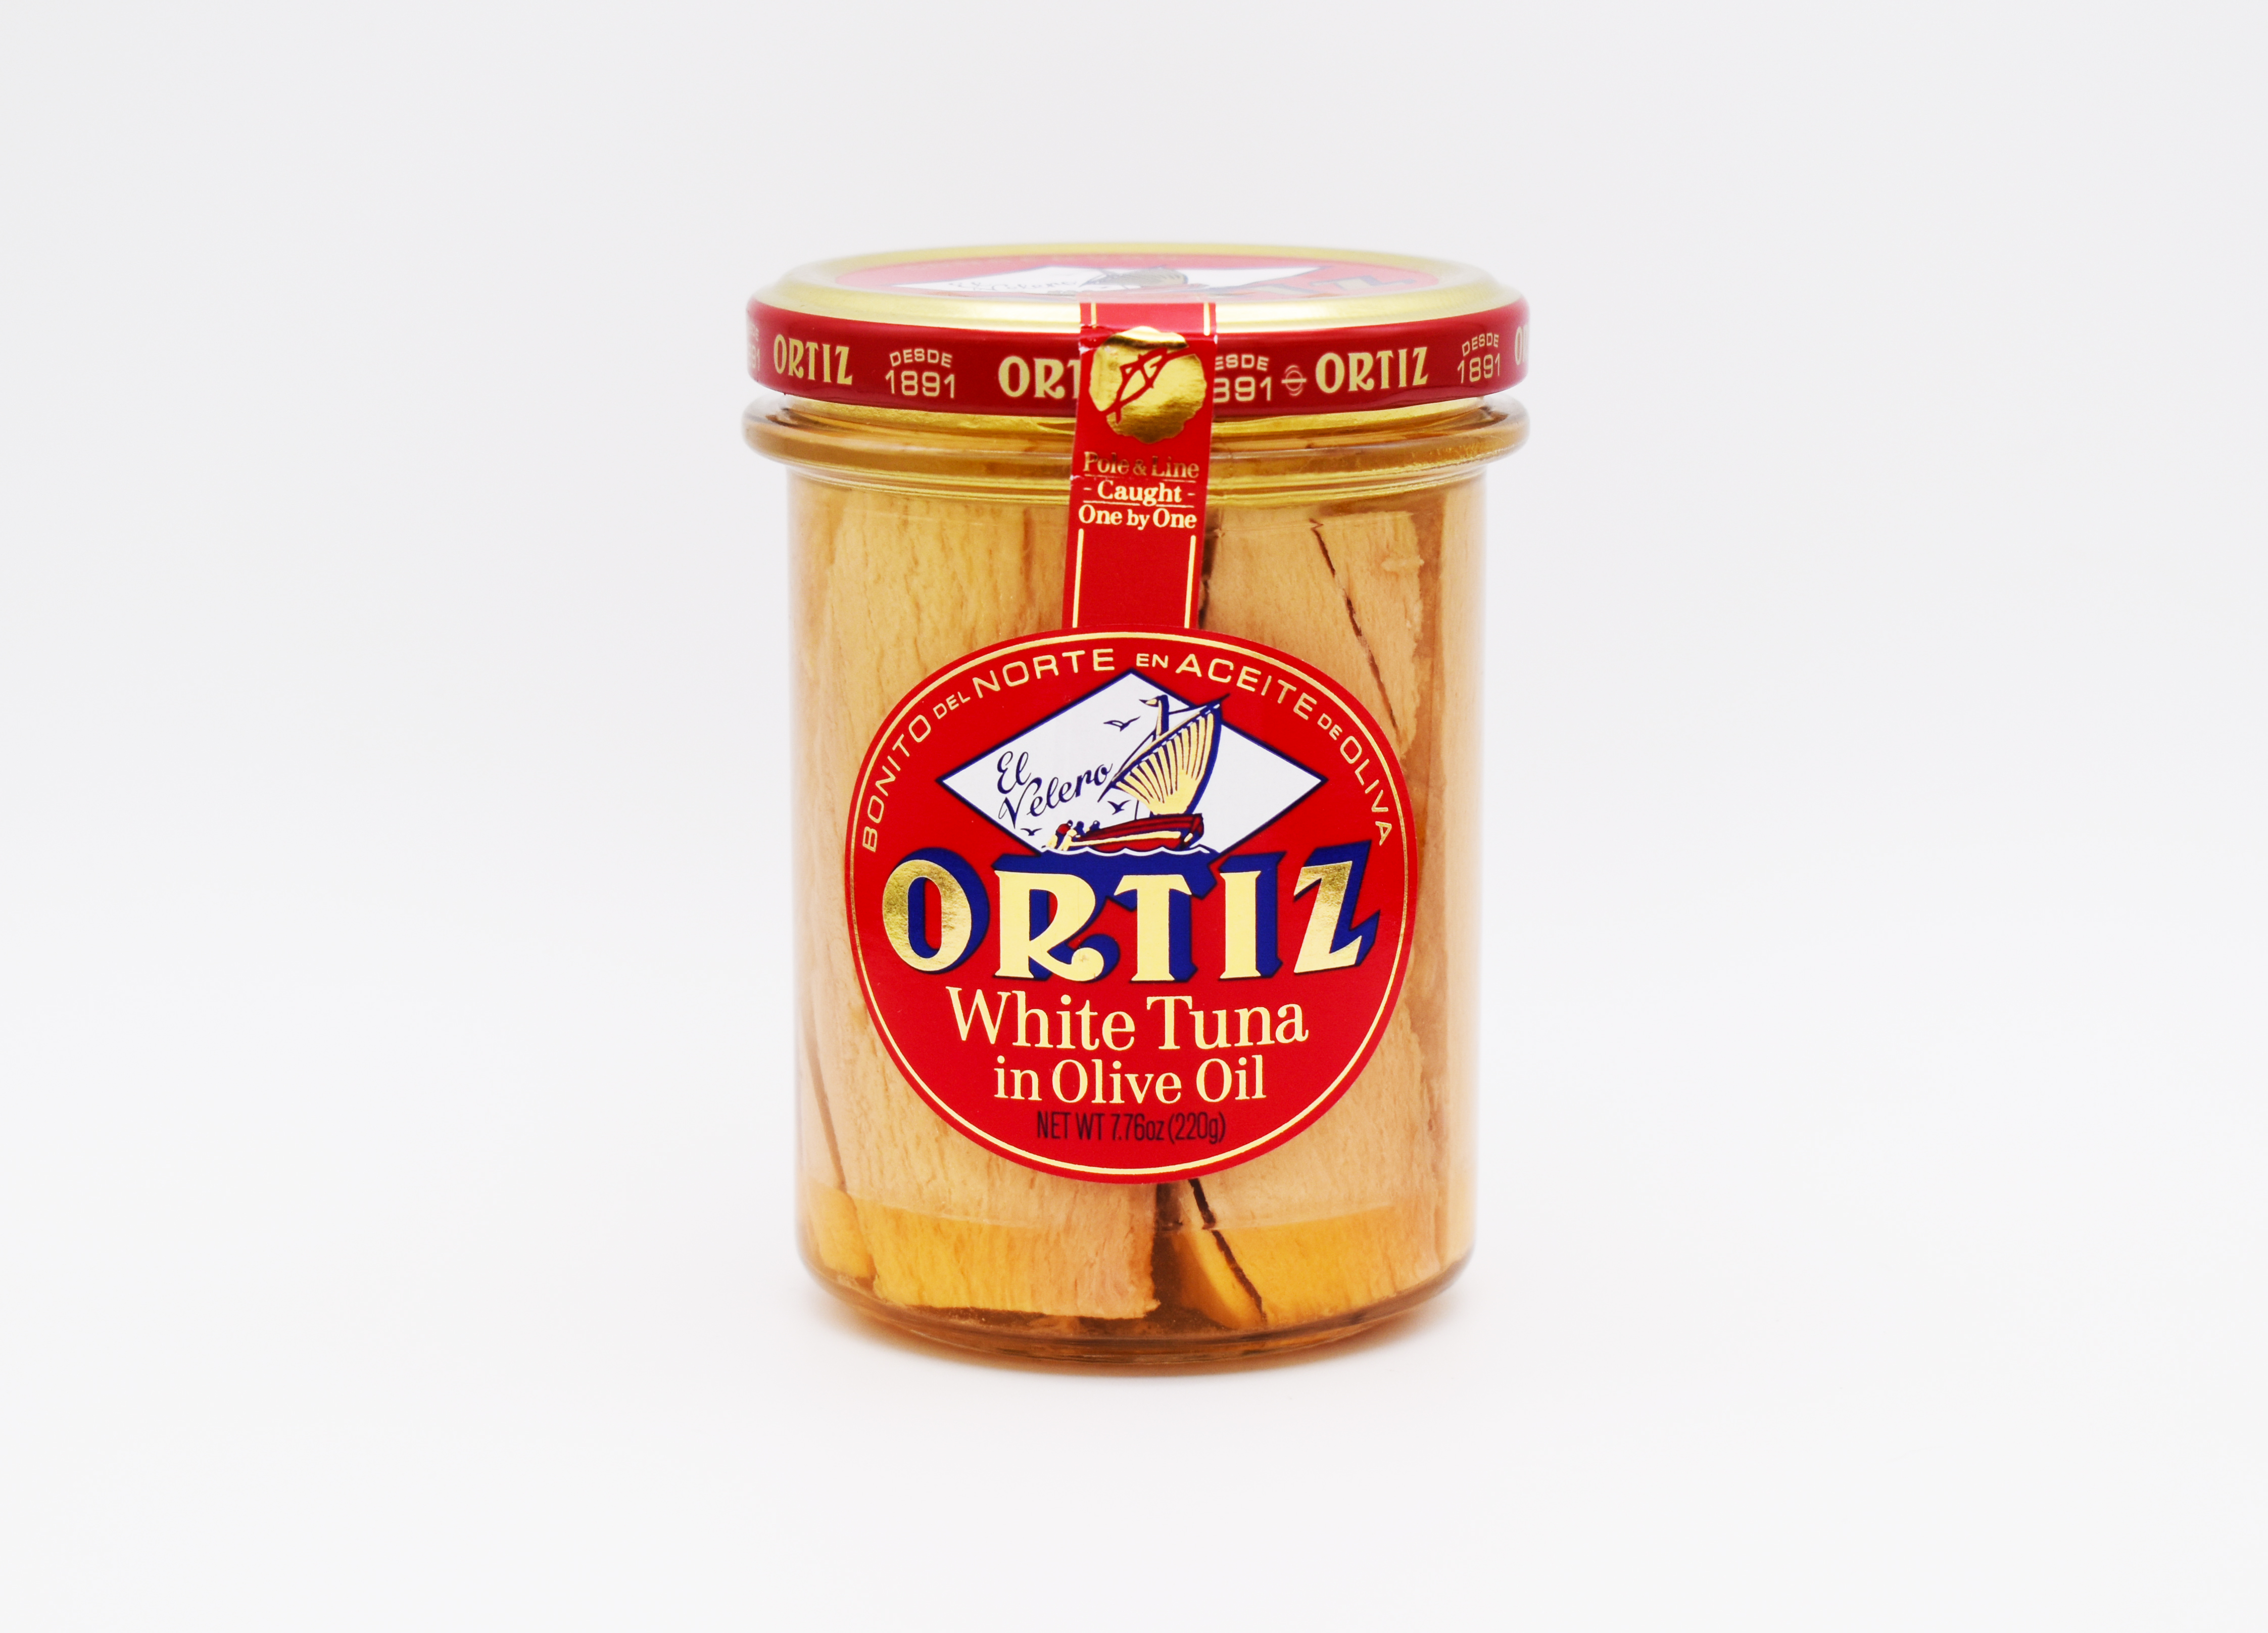 Product Image for Ortiz White Tuna